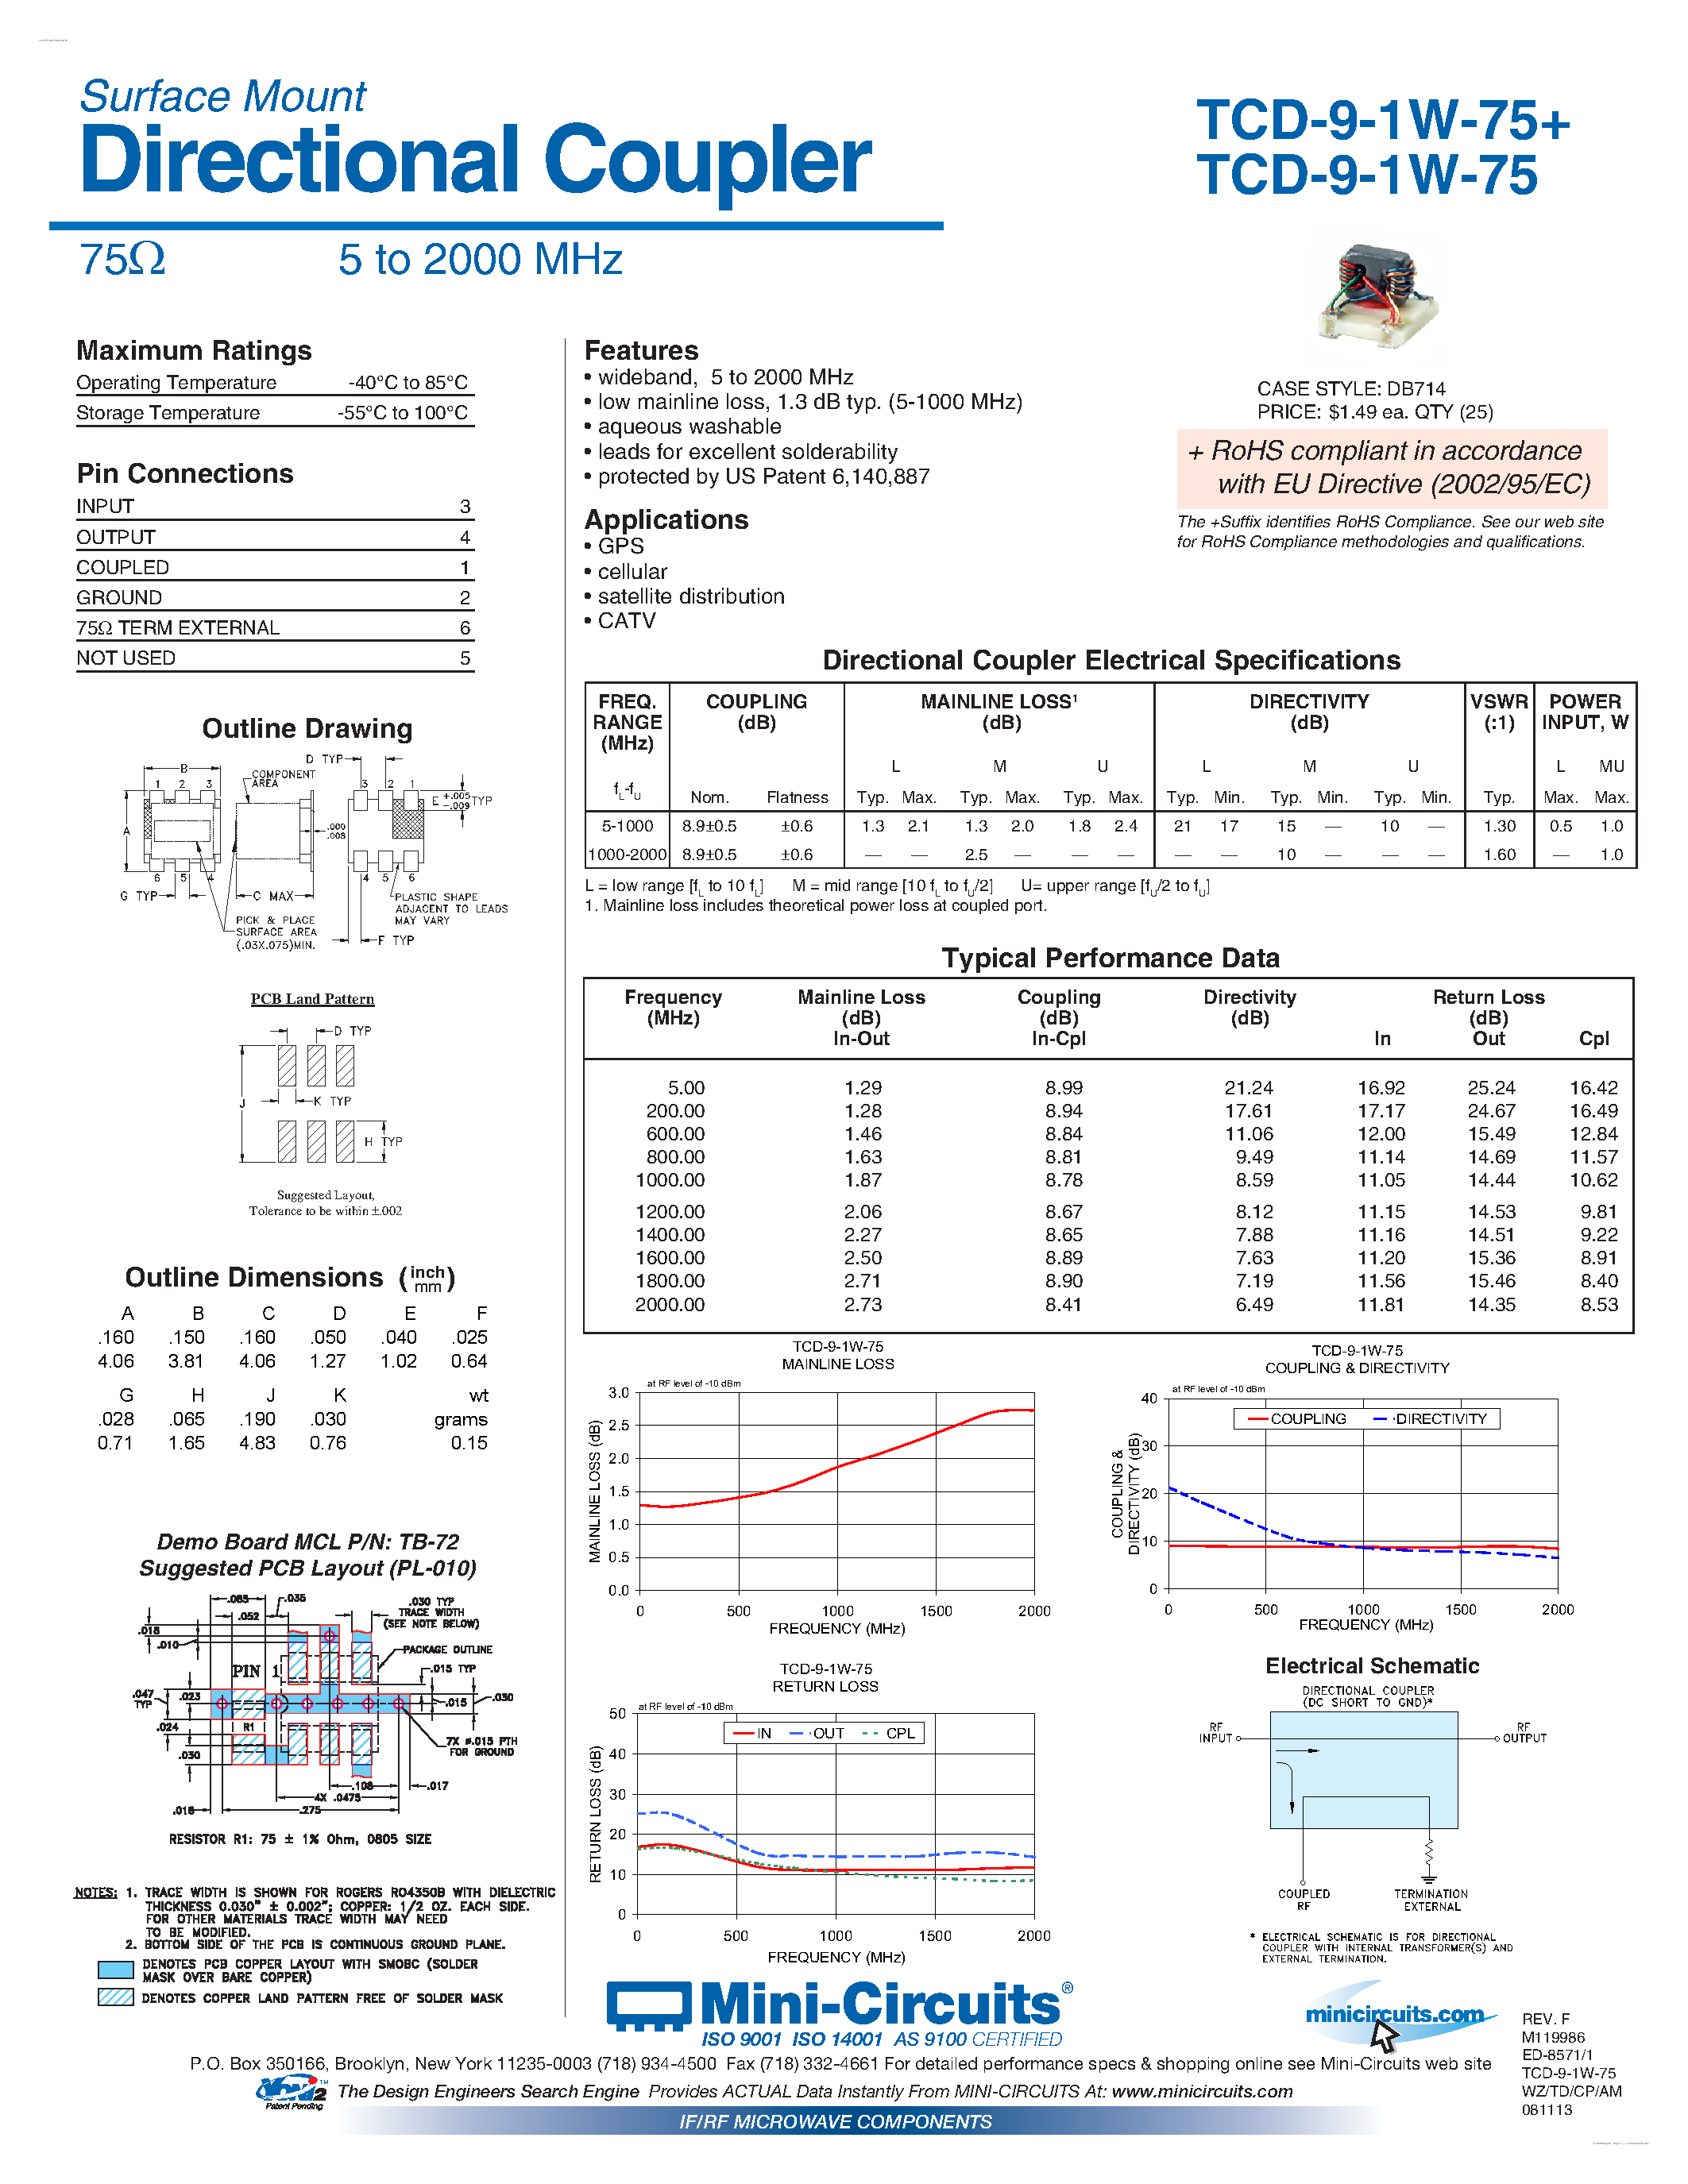 Datasheet TCD-9-1W-75 - Directional Coupler page 1